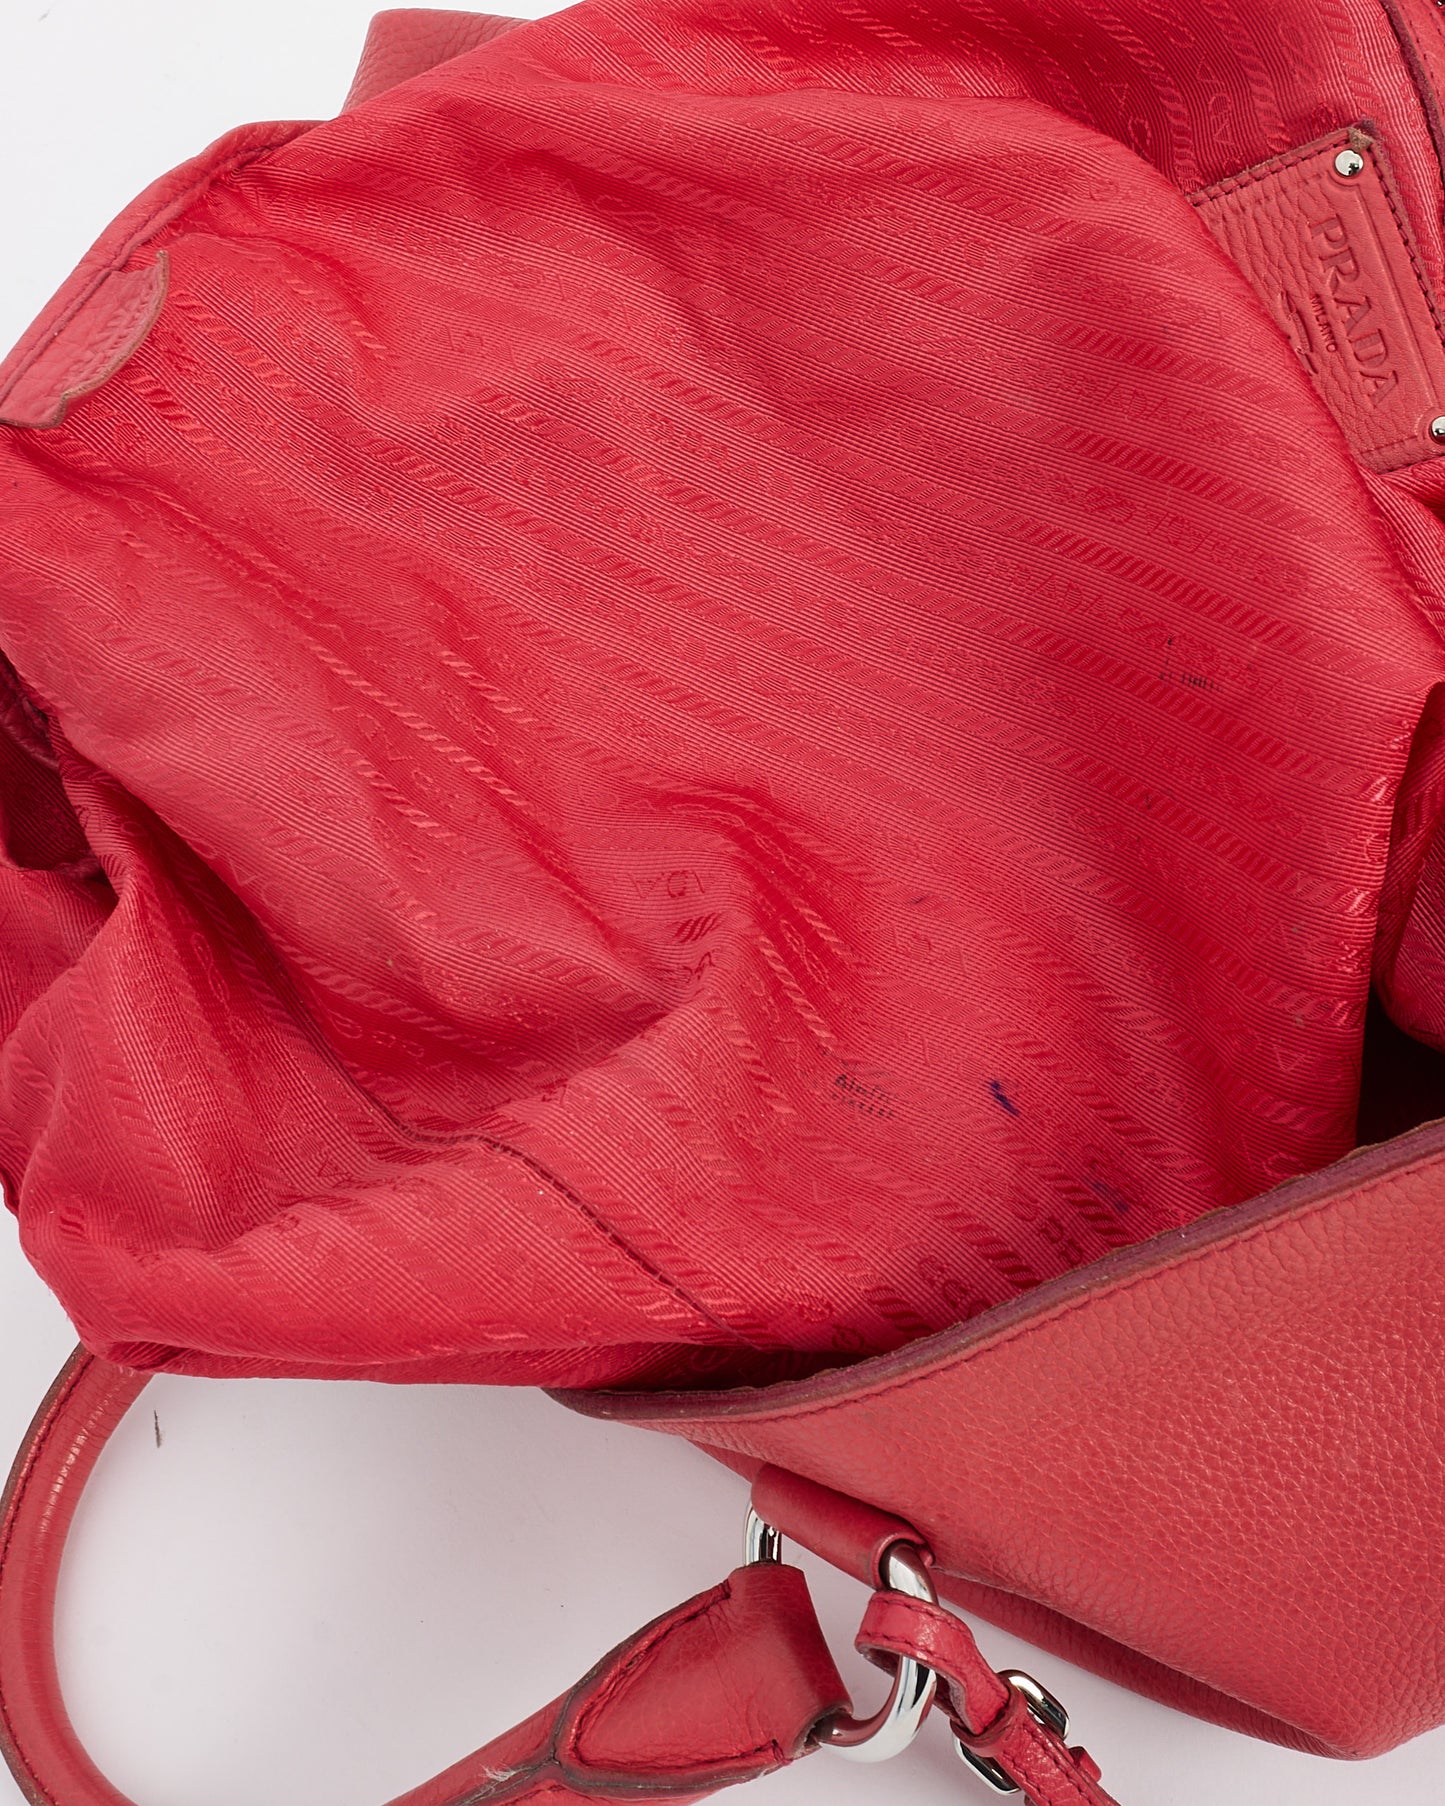 Prada Rose Red Leather Daino Large Convertible Tote Bag